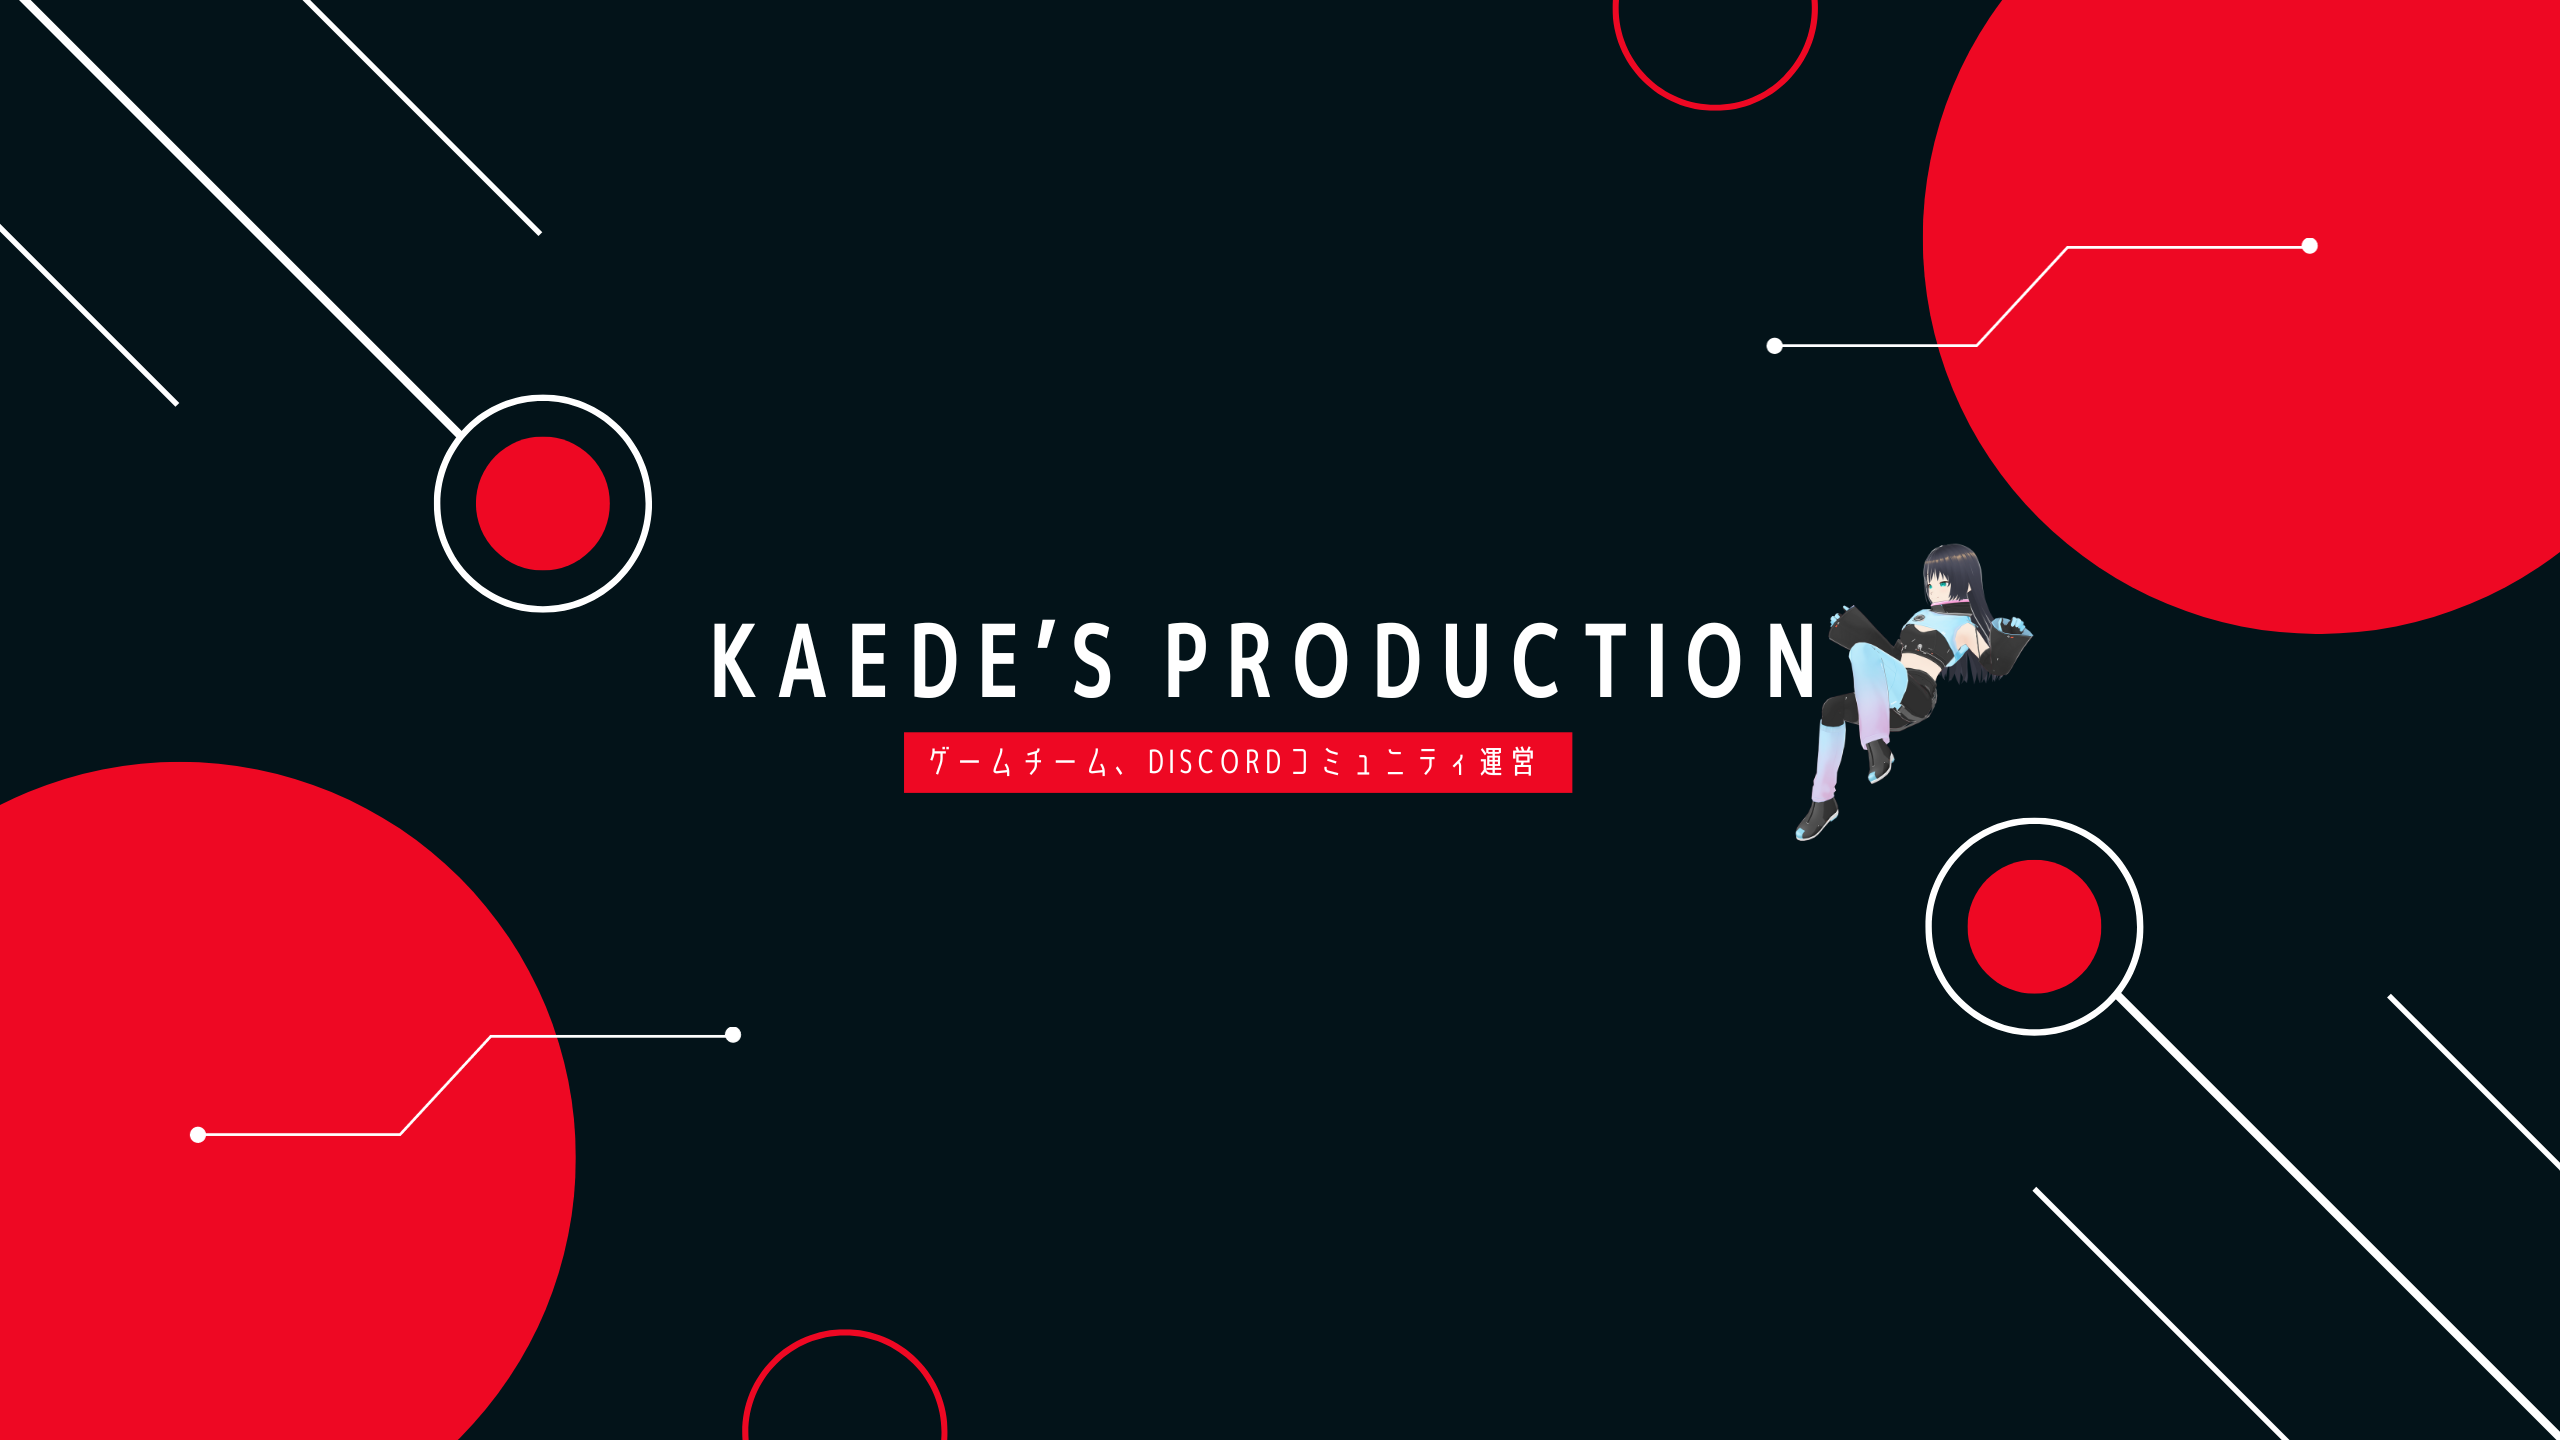 Kaede's Production